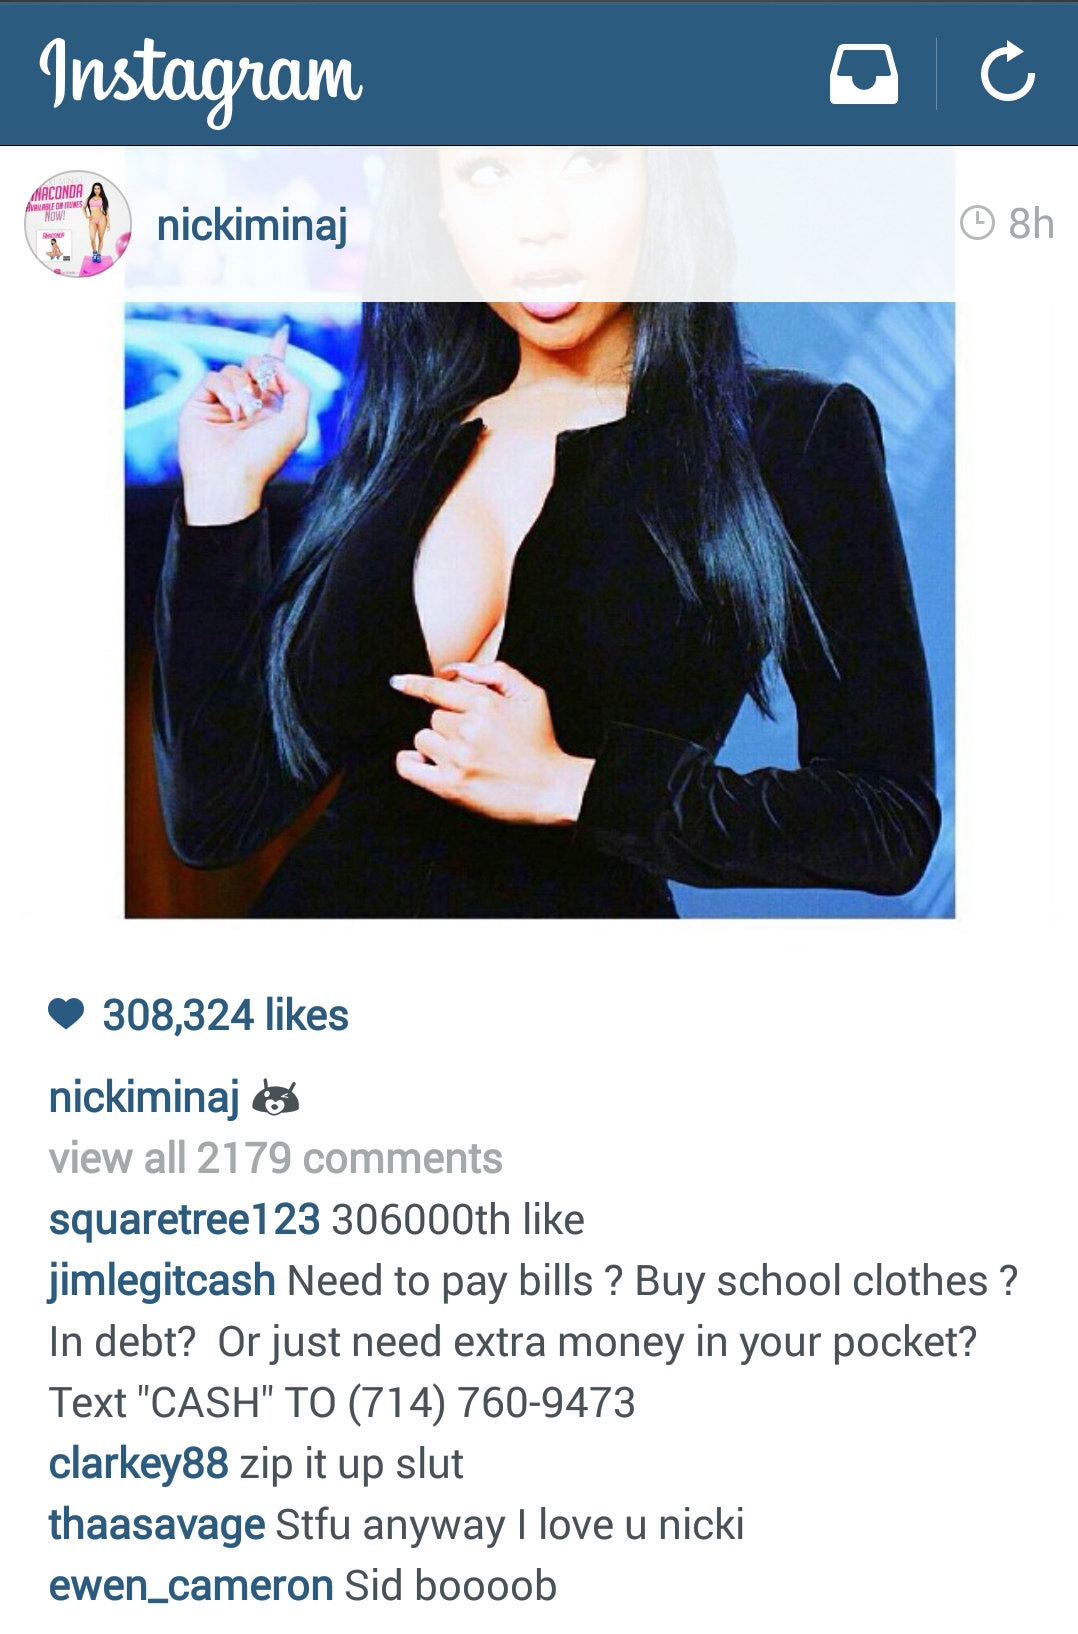 VMA Edition of Insane Instagram Comments: Nicki Minaj - The Average Nobodies1078 x 1634